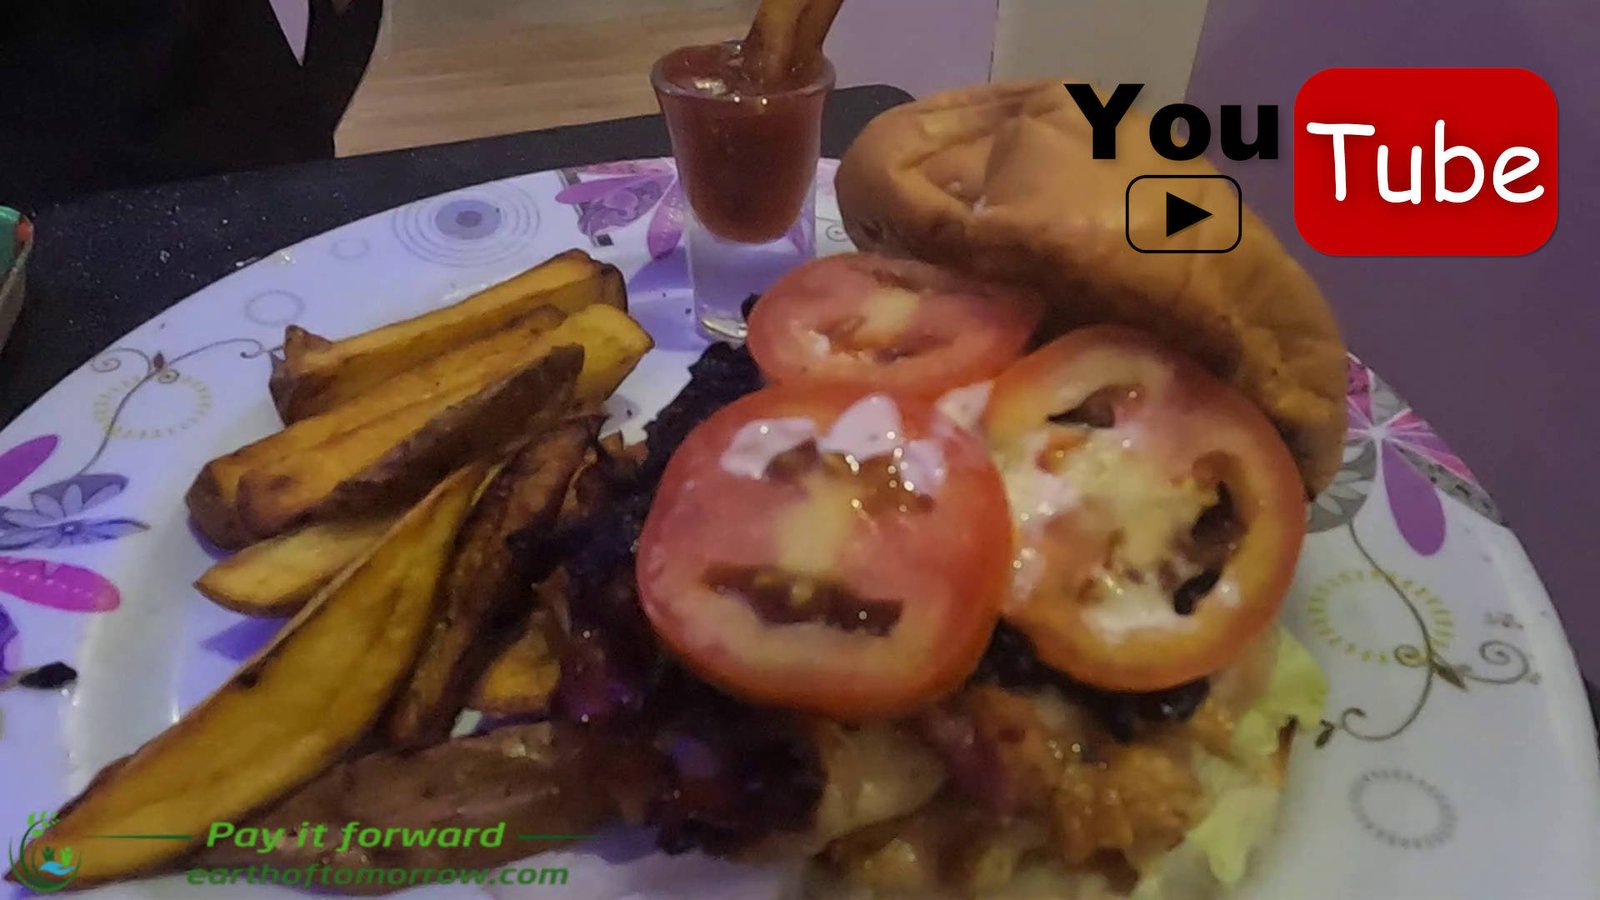 Chicken burger cook off between Jessa and Aksel 1. Video